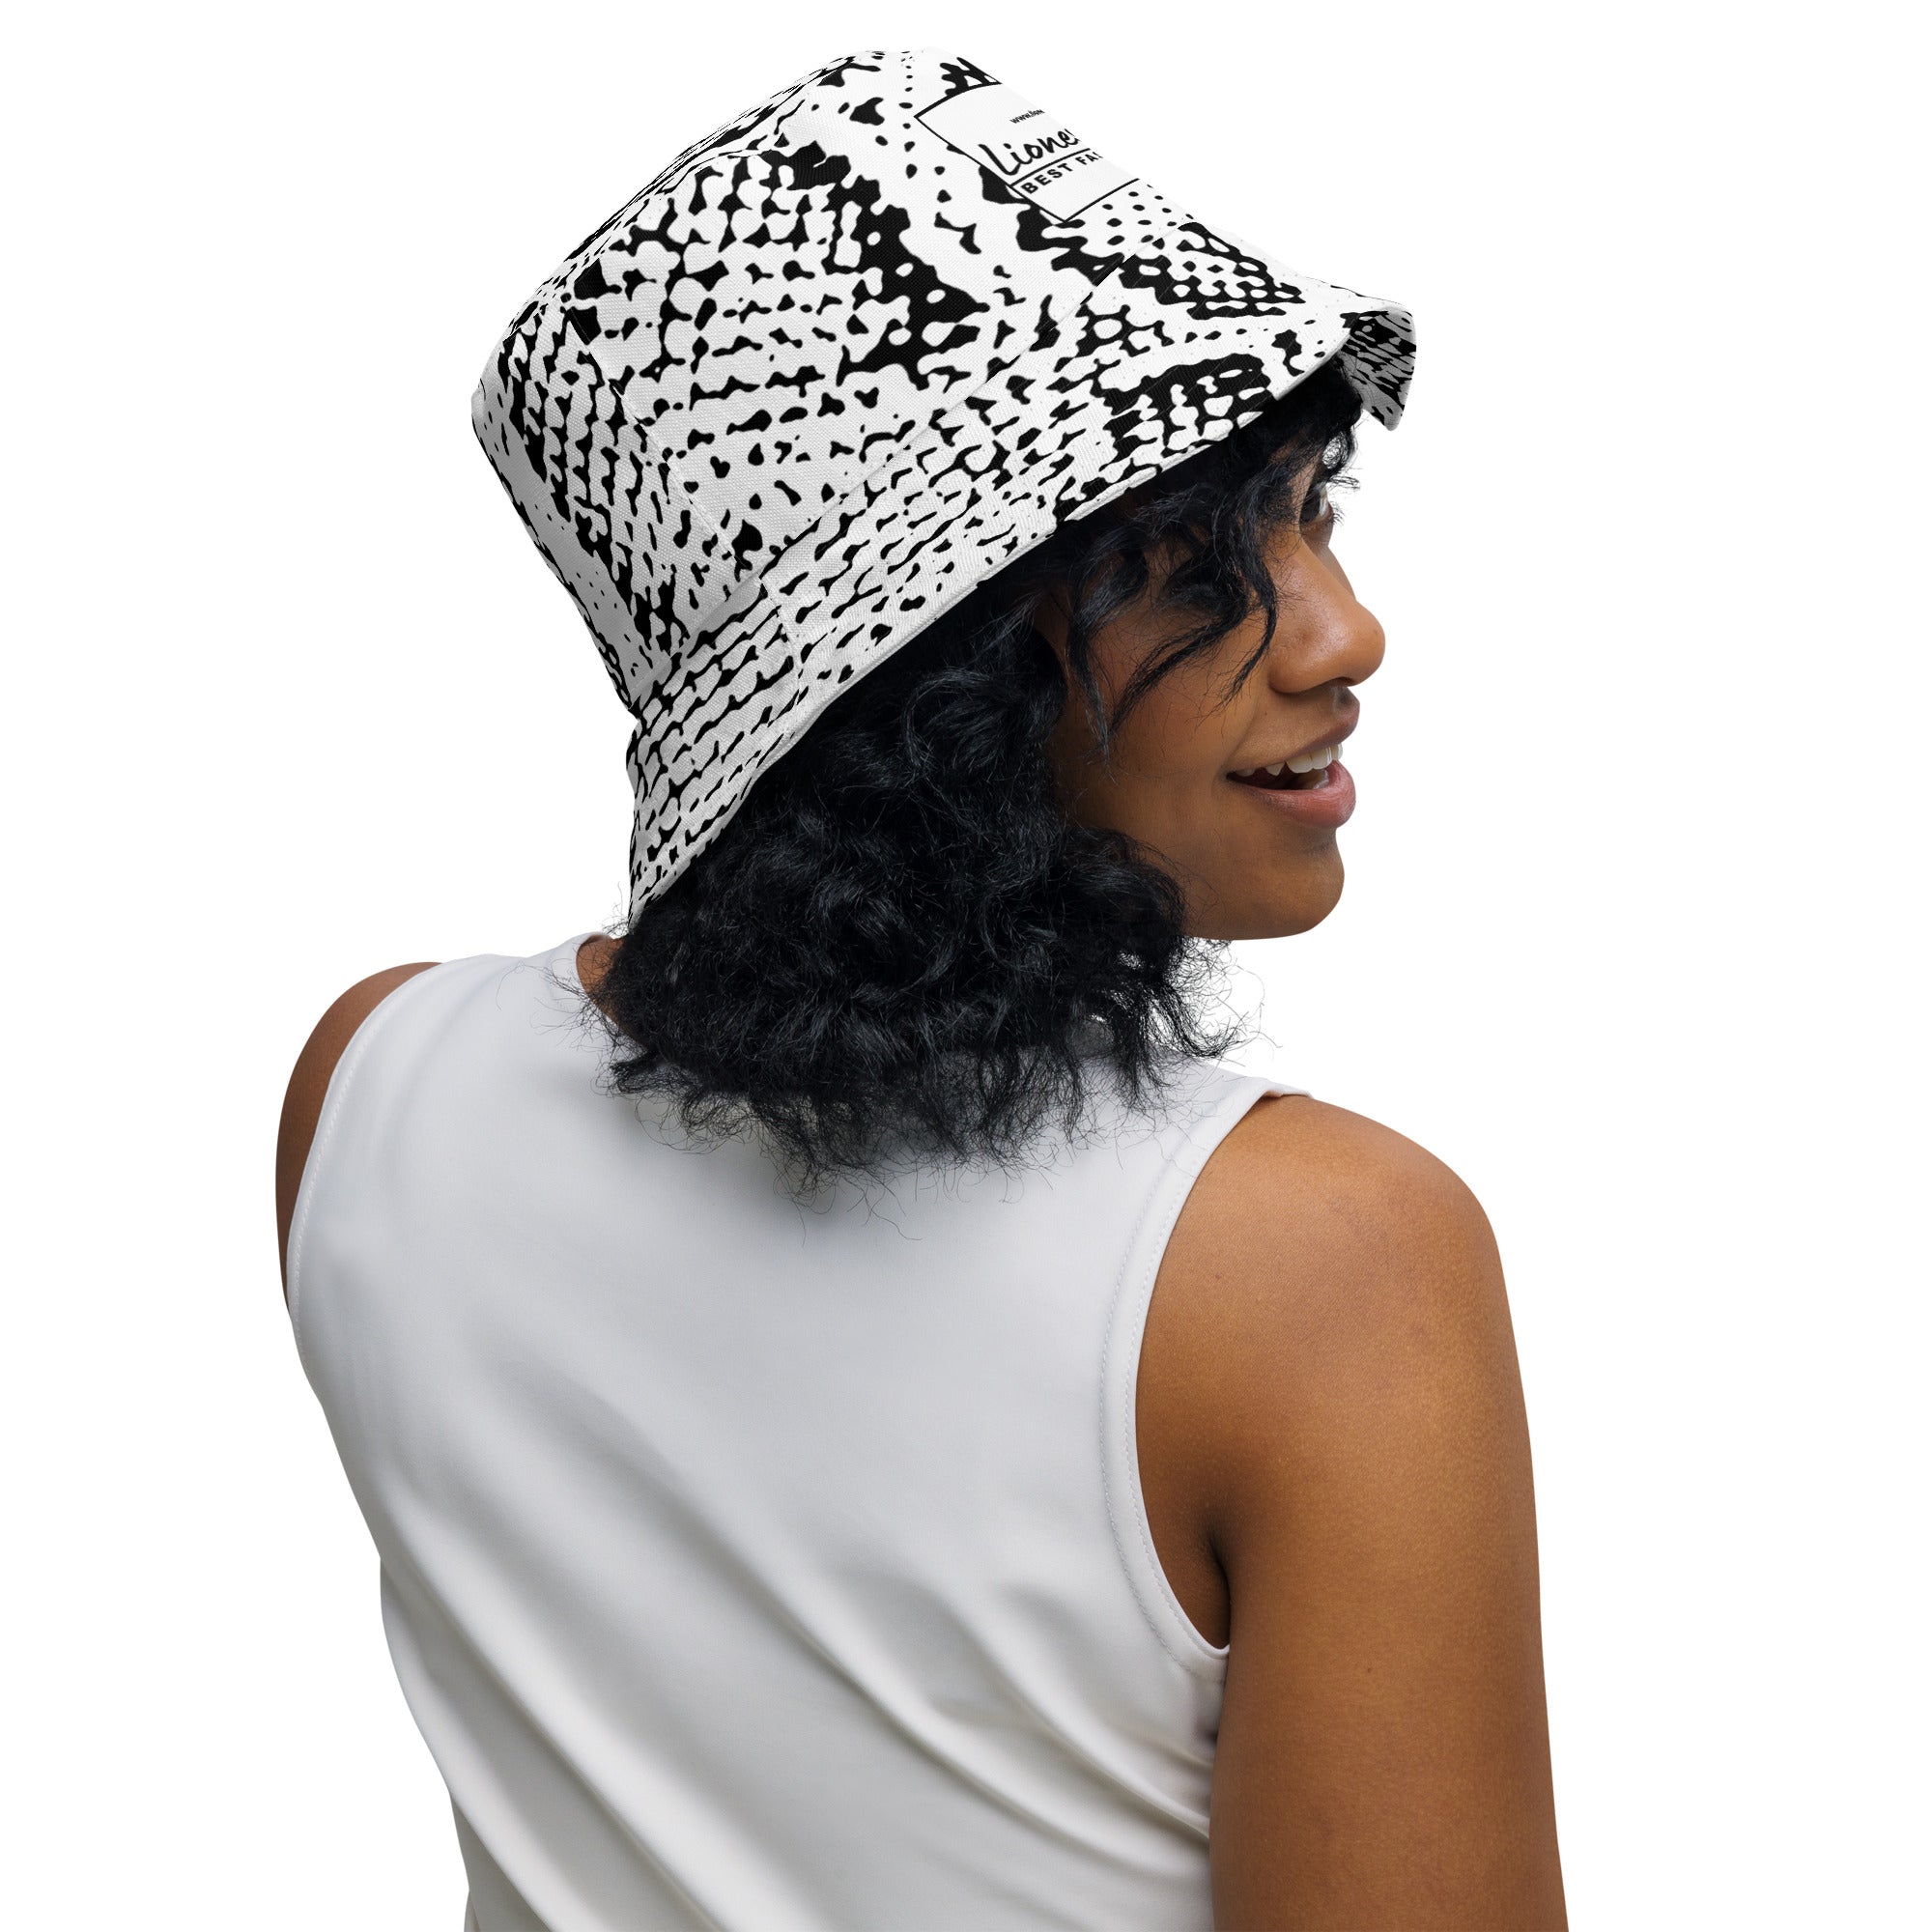 "Sleek Snakeskin Print Bucket Hat", lioness-love